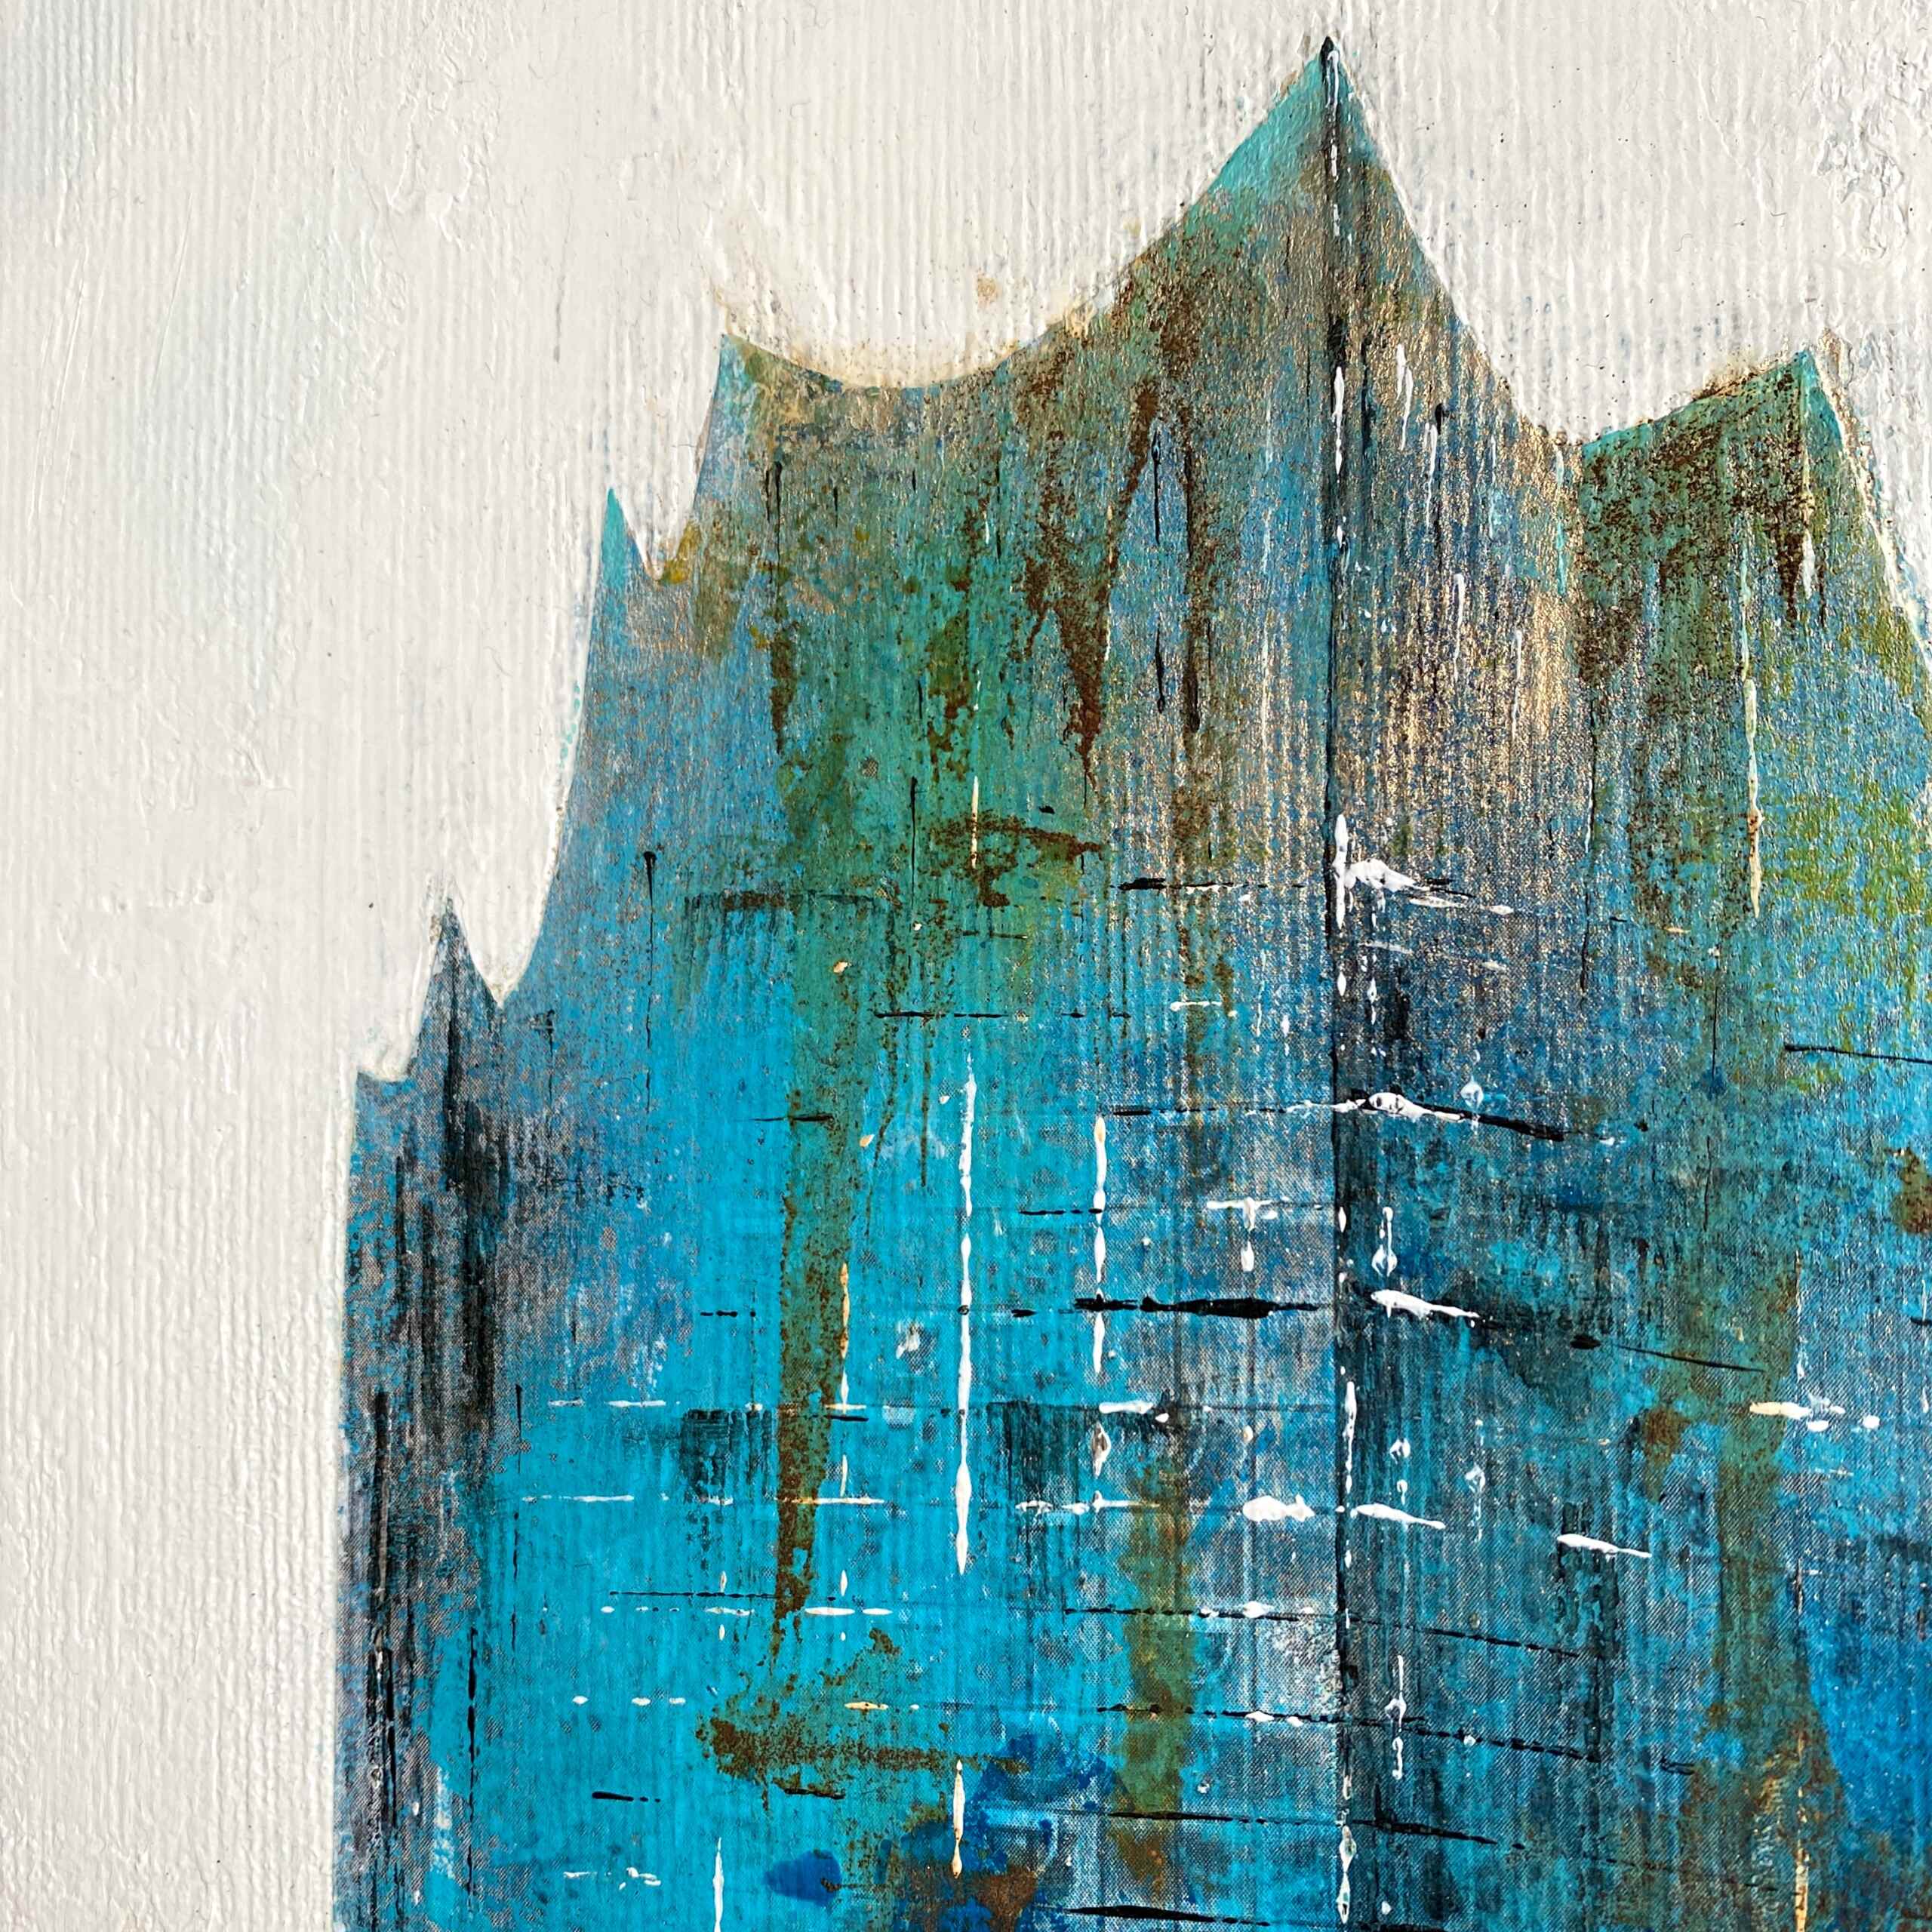 Detail of artwork "Elbphilharmonie No 1” by Nina Groth